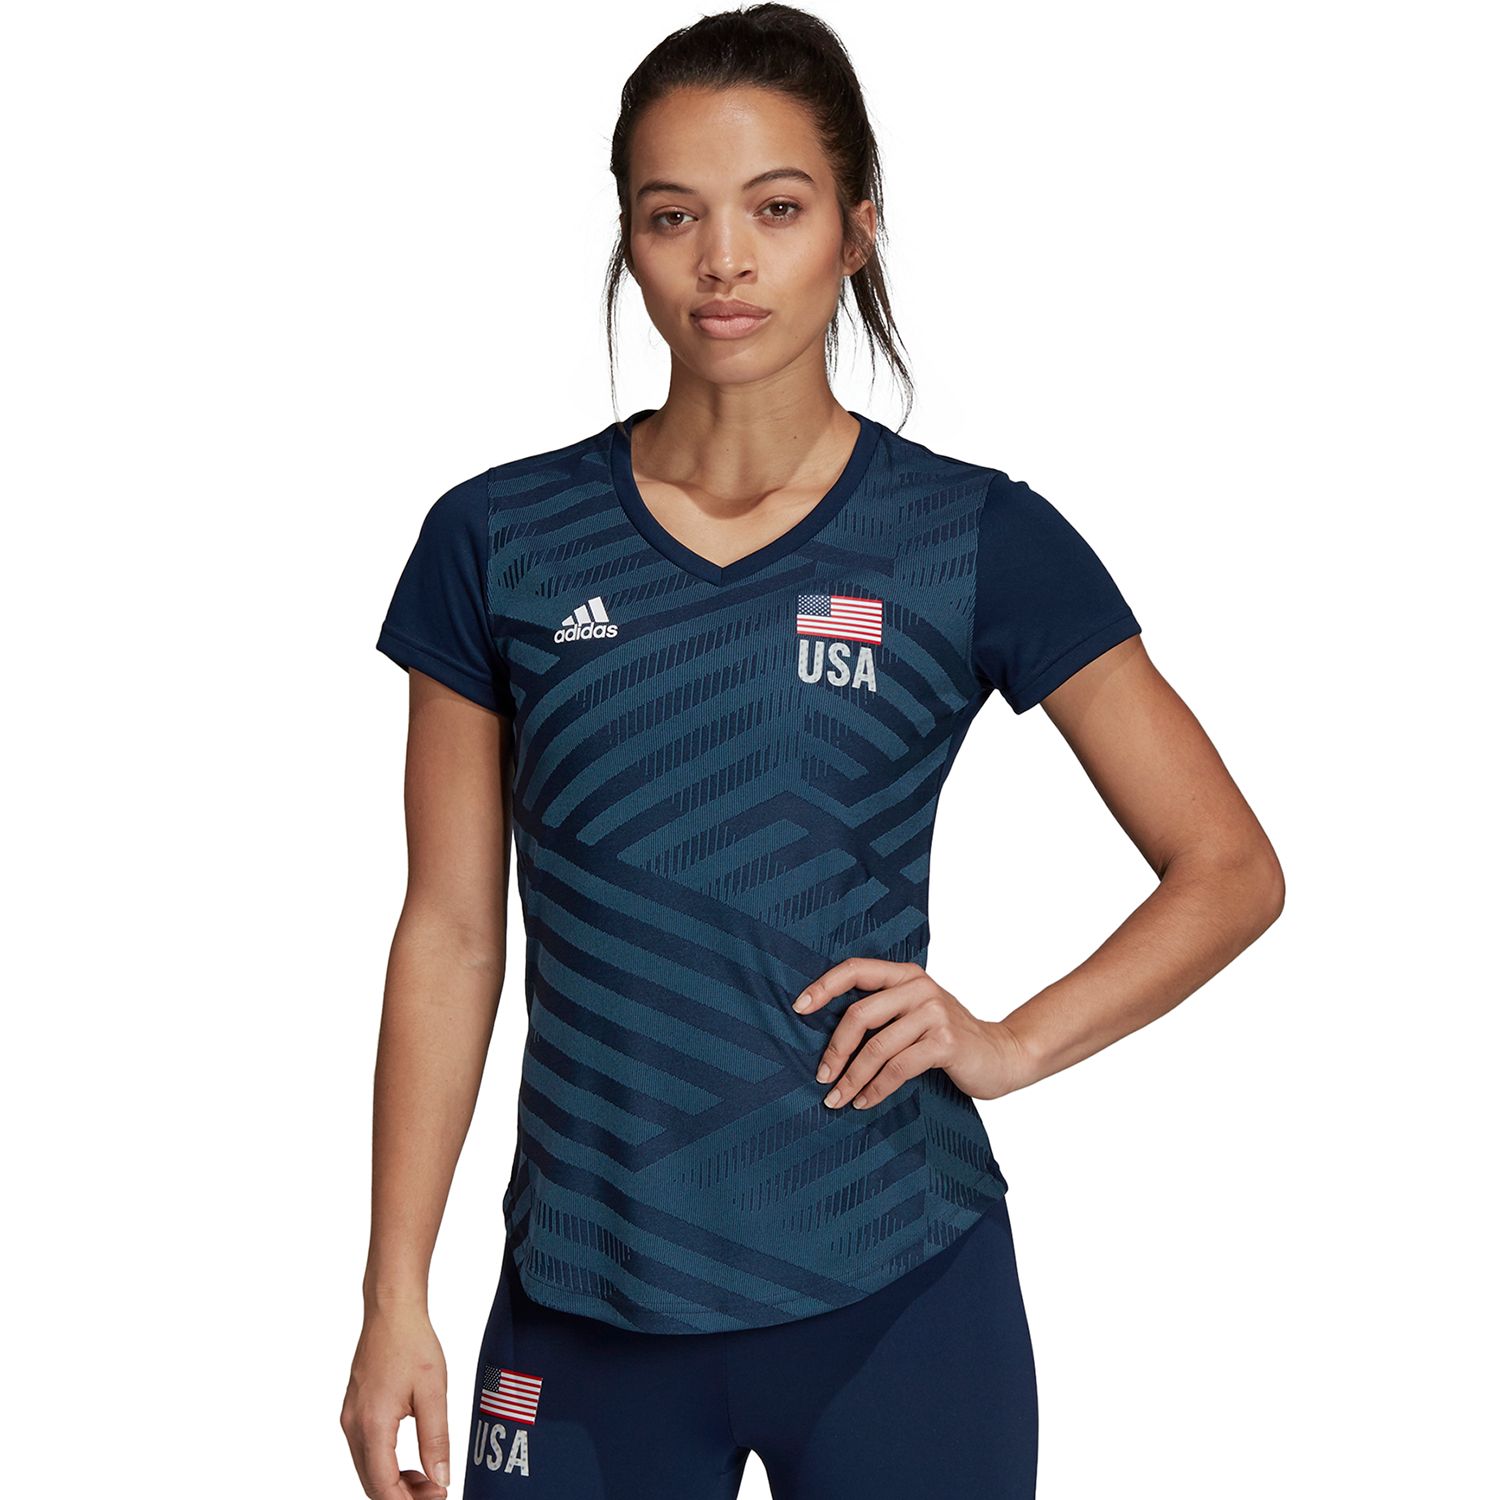 Adidas USA Volleyball Replica T-Shirt